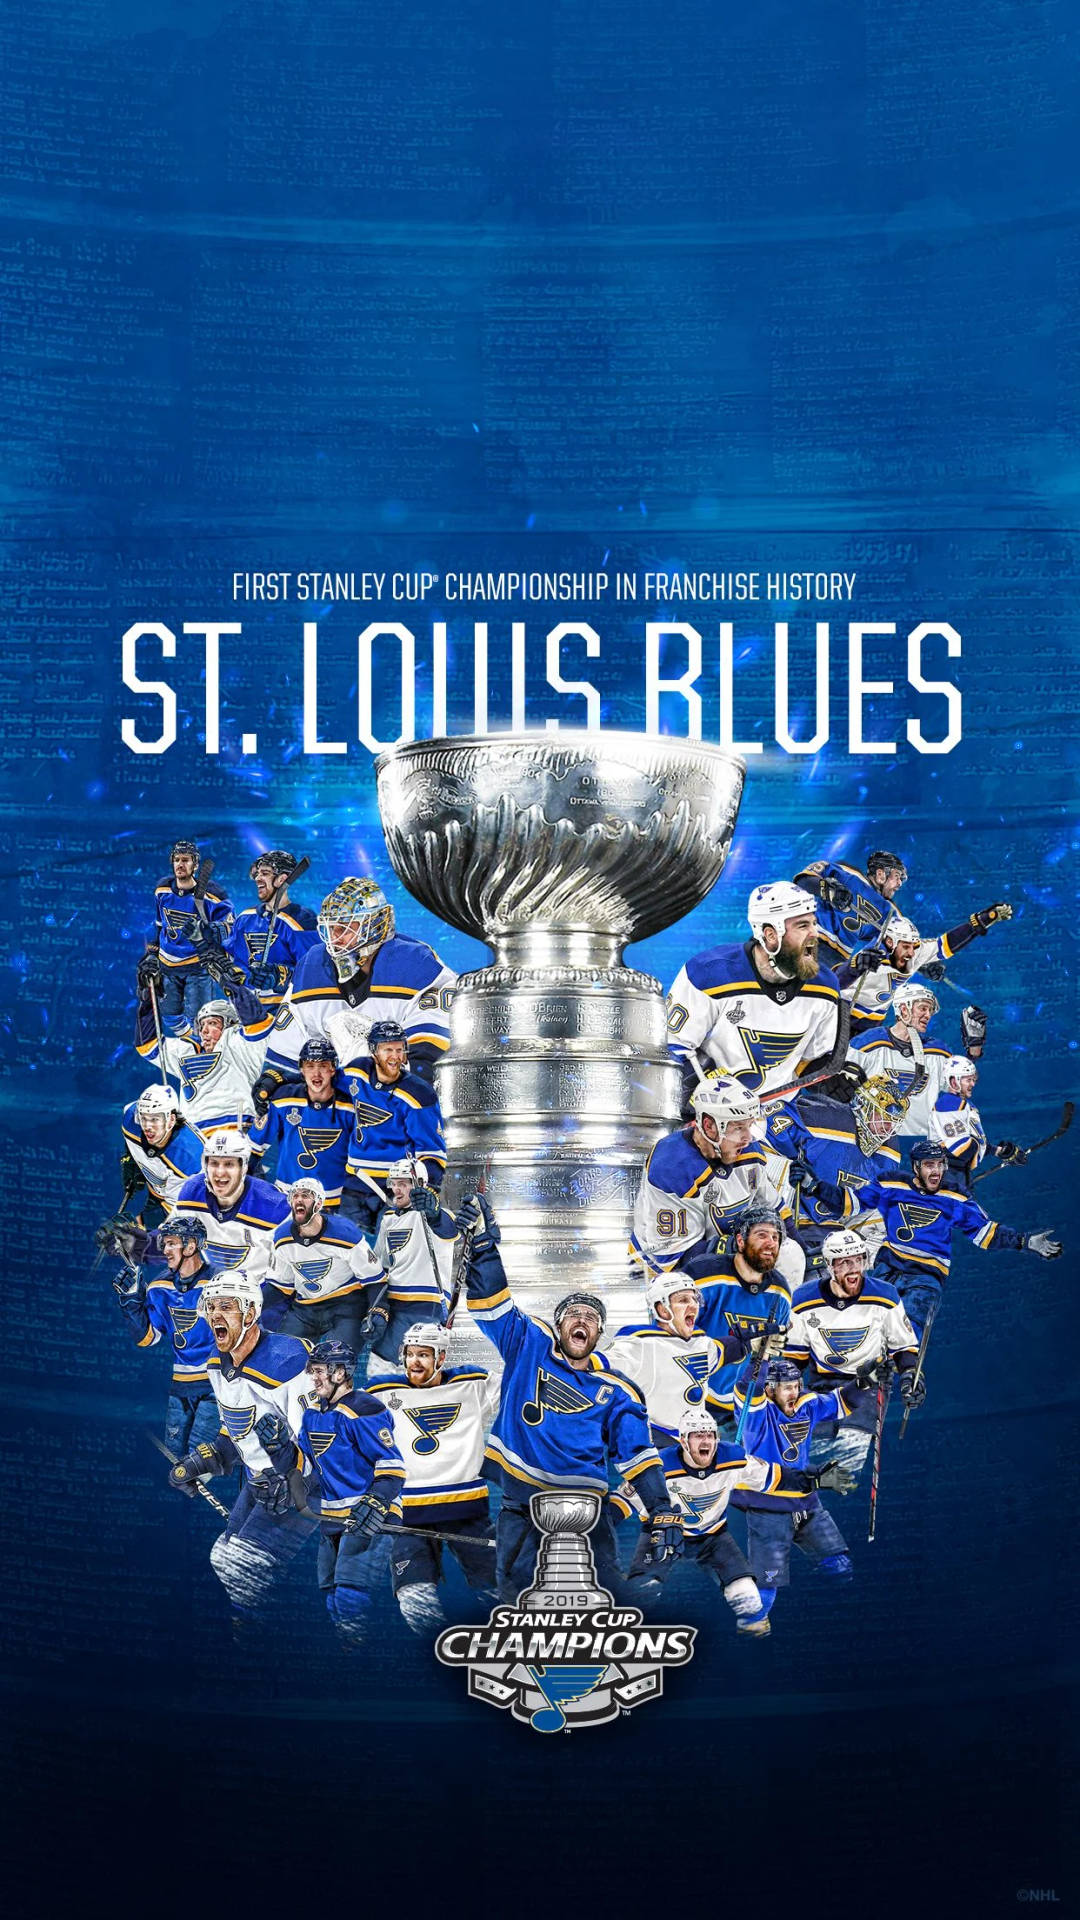 St. Louis Blues 2019 Stanley Cup Champions Celebration Signature Rink